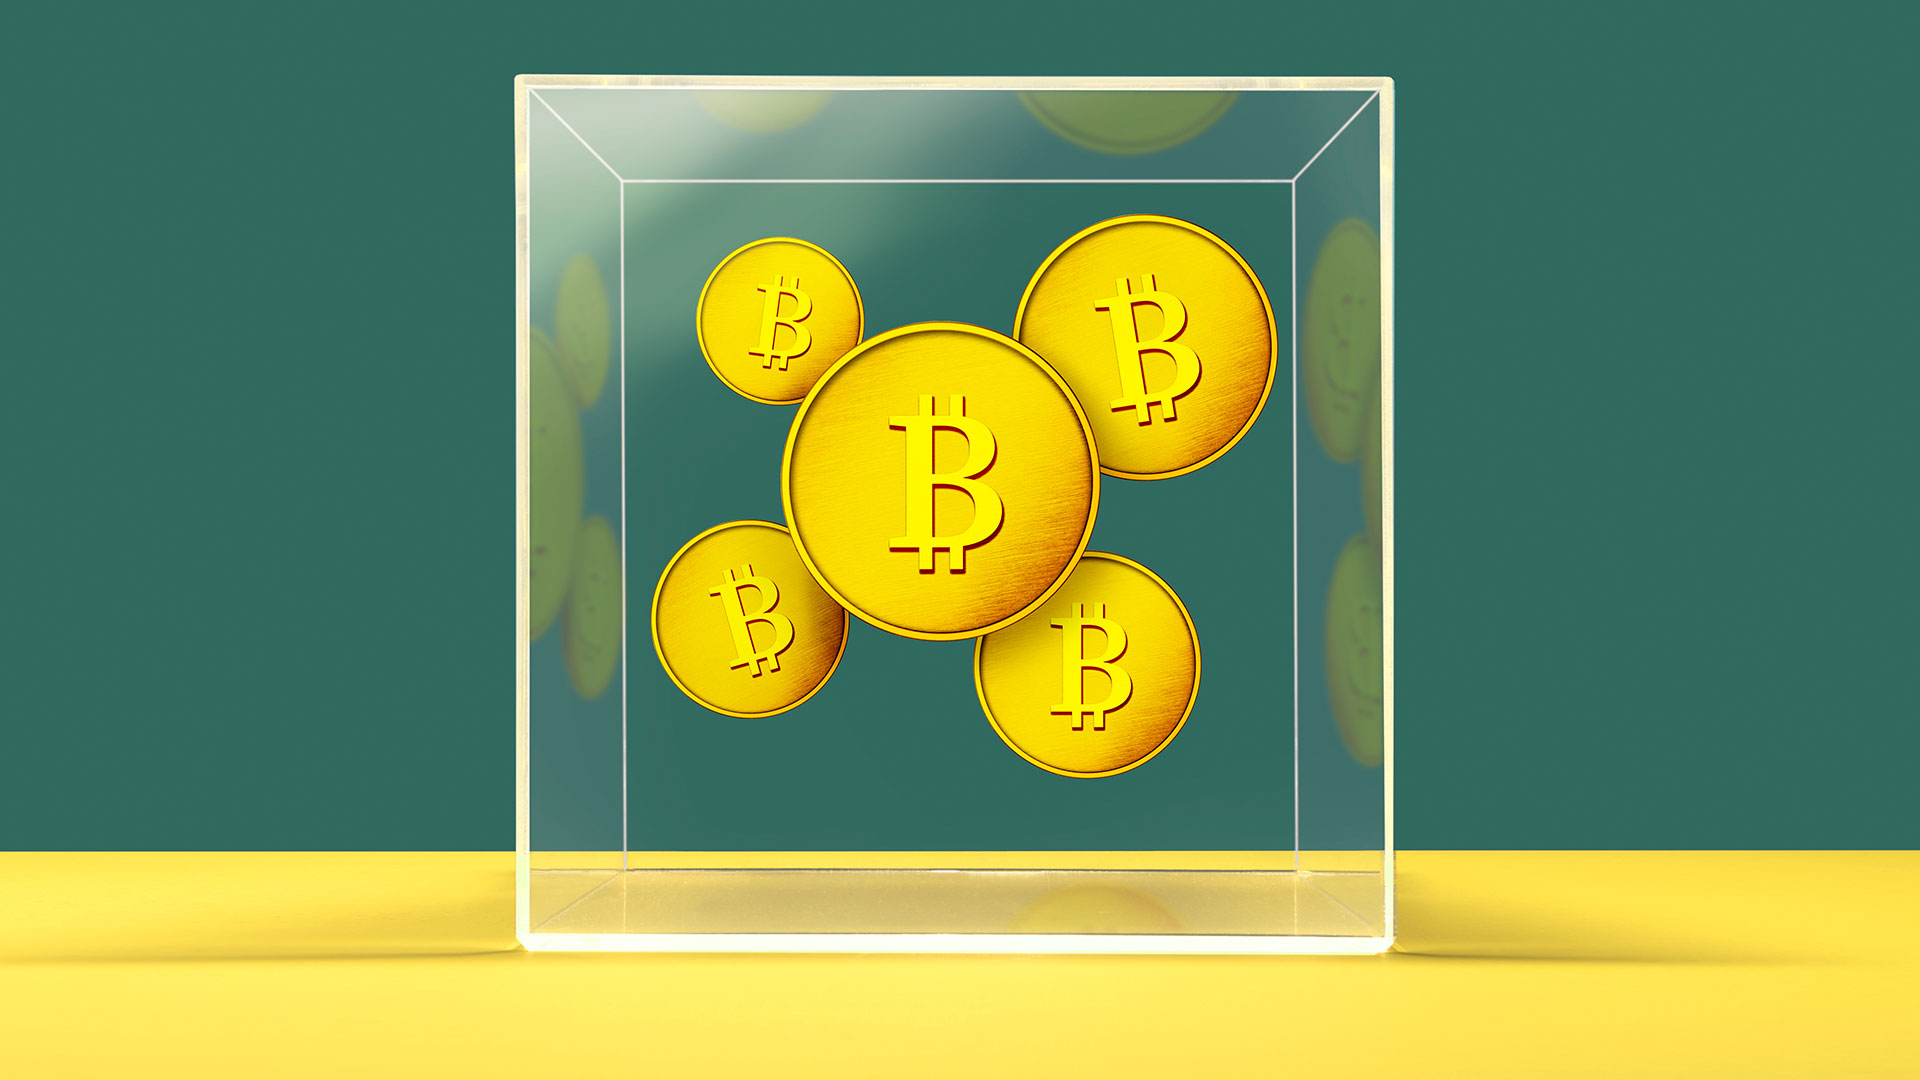 Bitcoin jetzt günstig kaufen? Robert Kiyosaki sagt Ja! (Foto: PM Images/GettyImages)